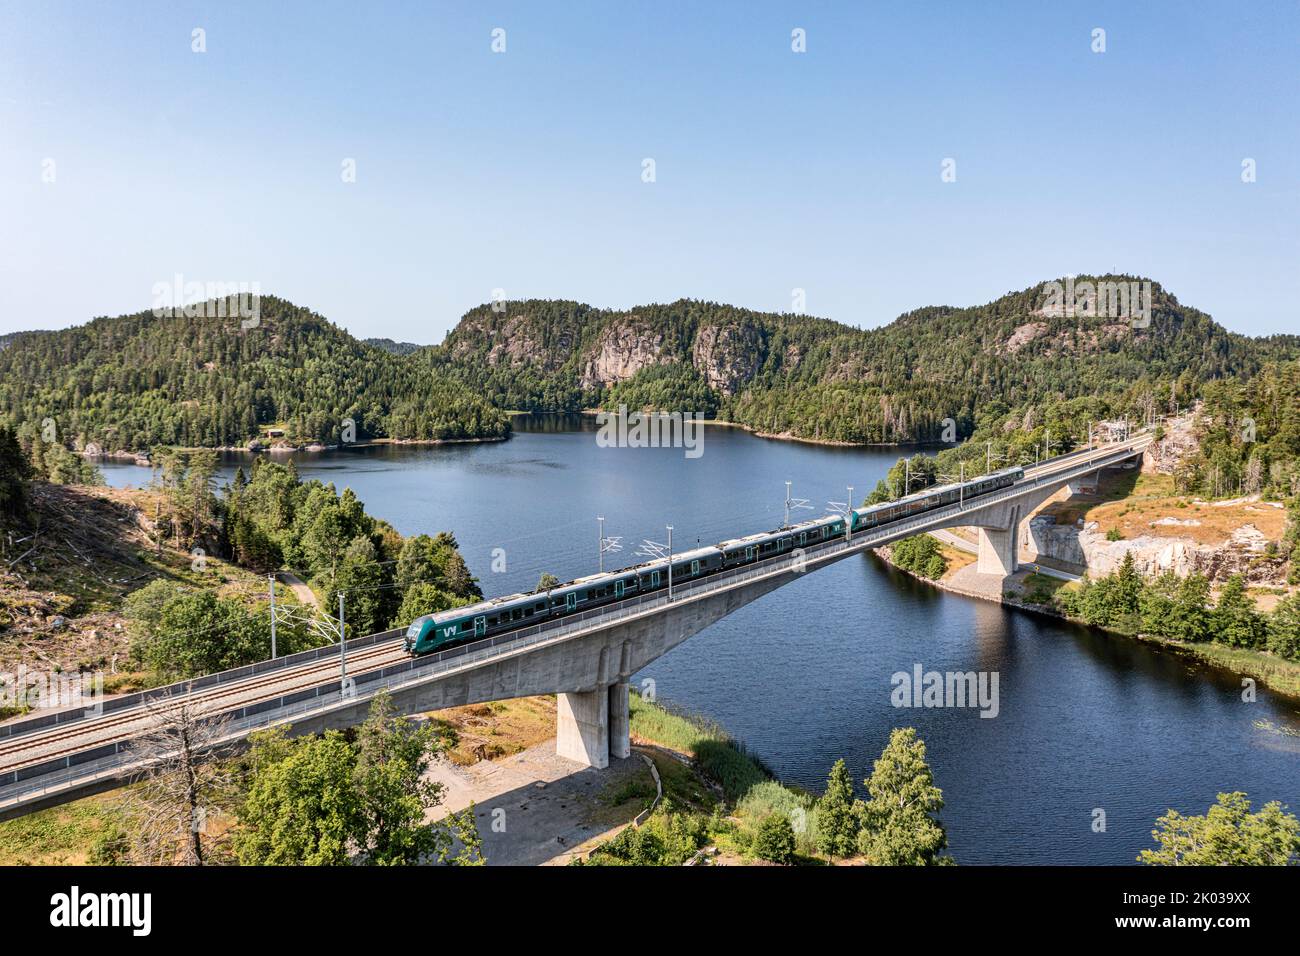 Norway, Vestfold og Telemark, Larvik, bridge, train, lake, forest, mountains, landscape picture Stock Photo